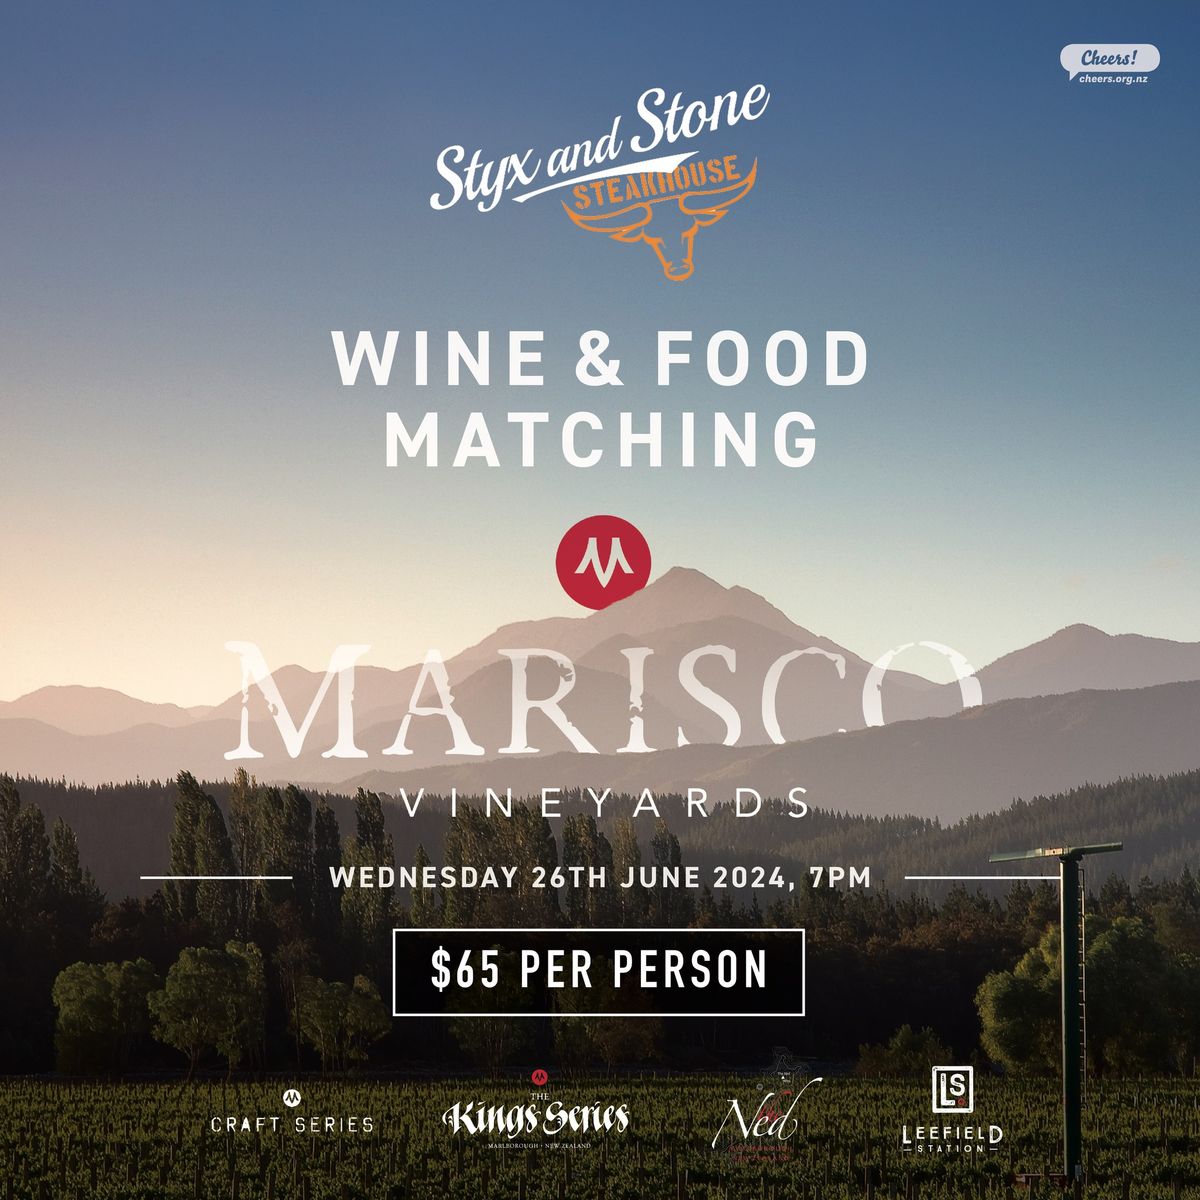 Marisco Wine & Food Matching